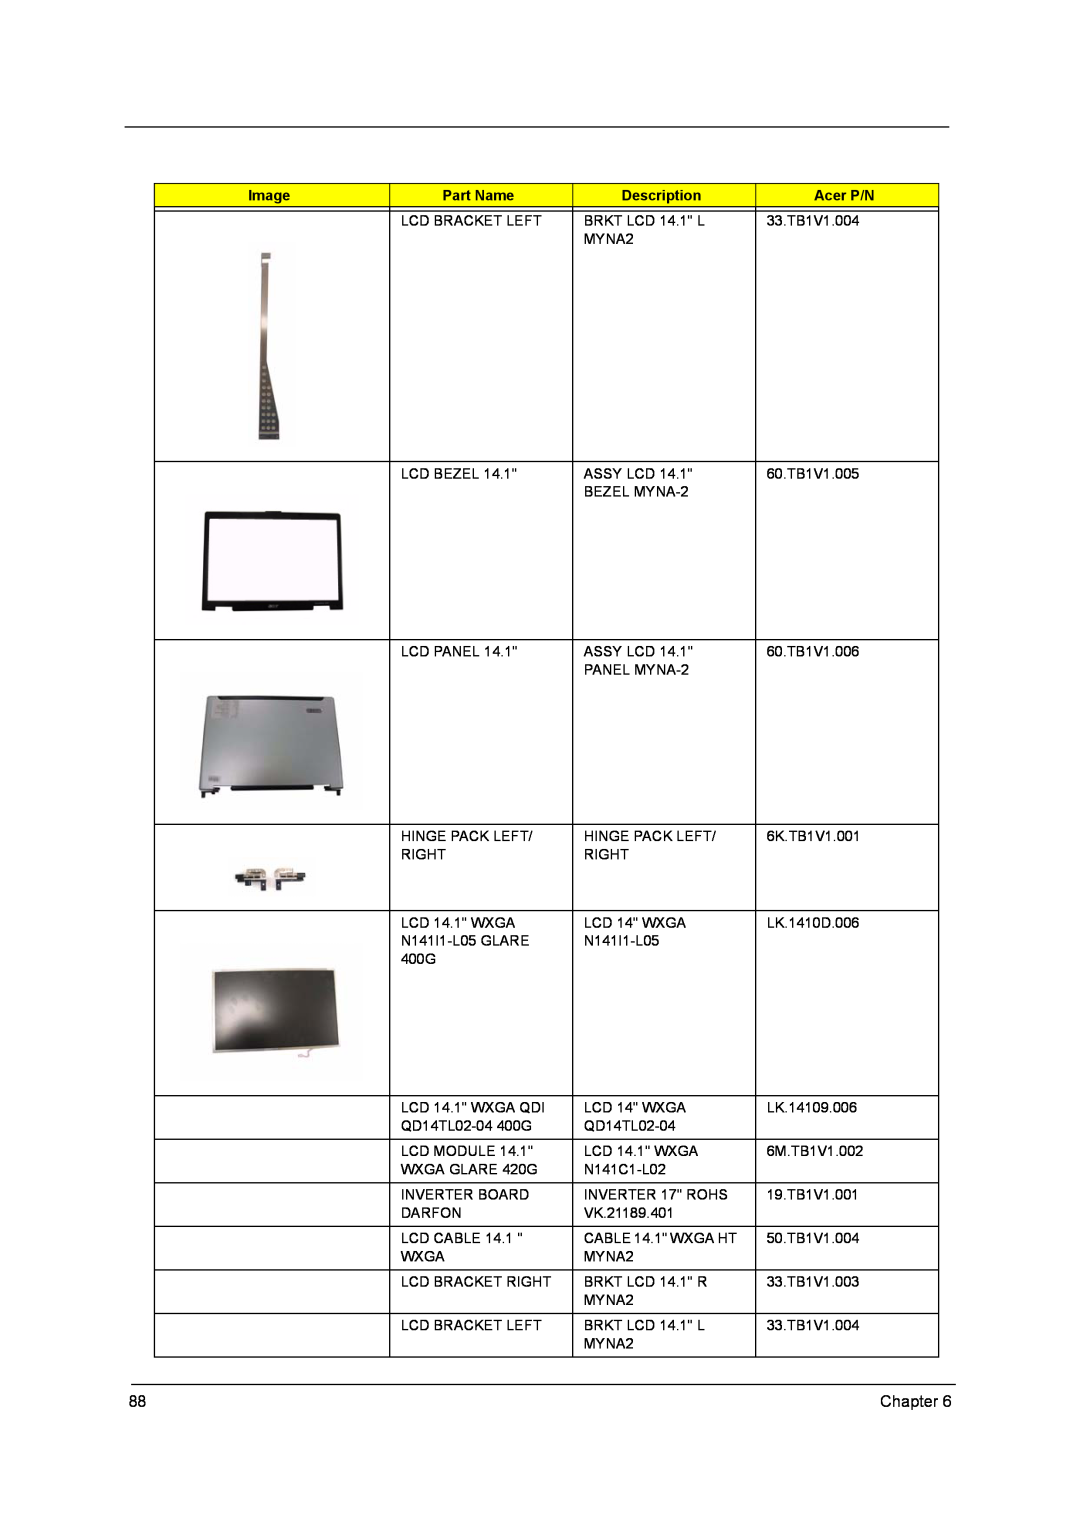 Acer N141C1-L02 (WXGA+), QD14TL0102, PLUTO MK6025GAS, MK4025GAS, N141I1-L05 (GLARE) Image, Part Name, Description, Acer P/N 